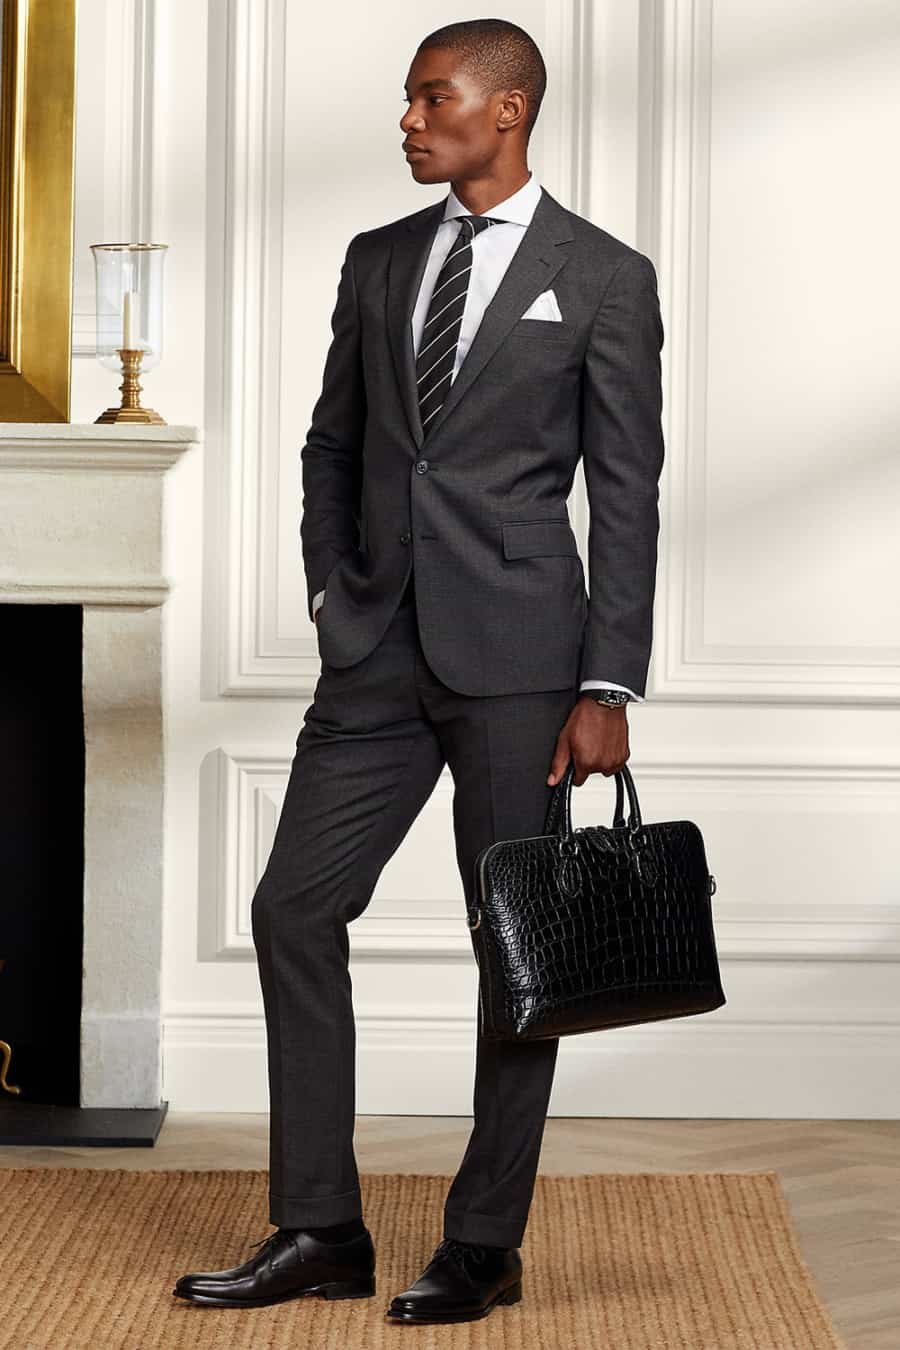 Men's charcoal suit with black Oxford shoes